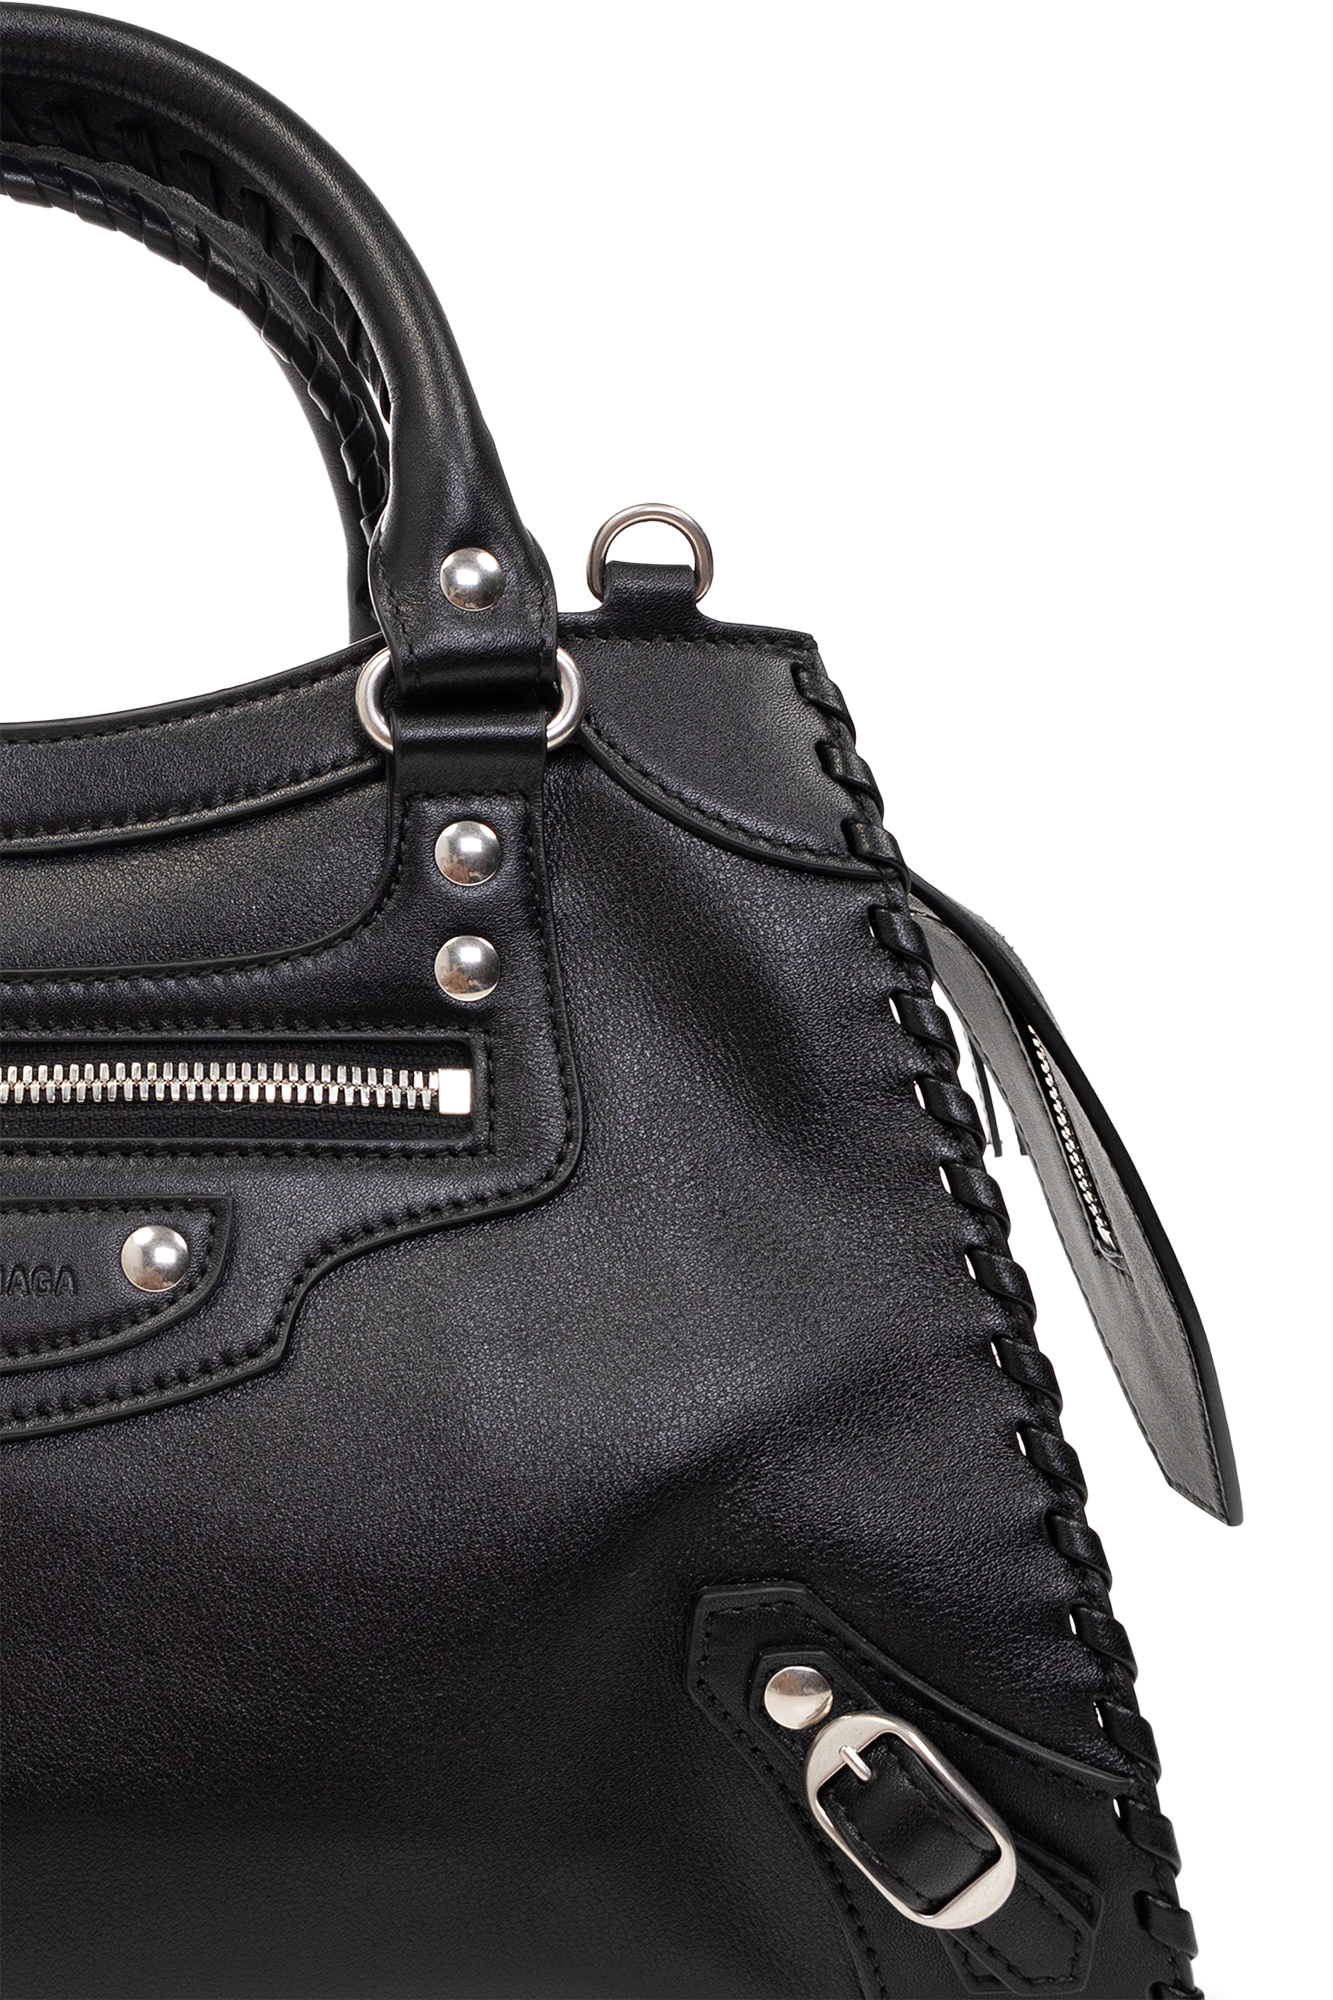 Balenciaga ‘Neo Classic Small’ shoulder brown bag